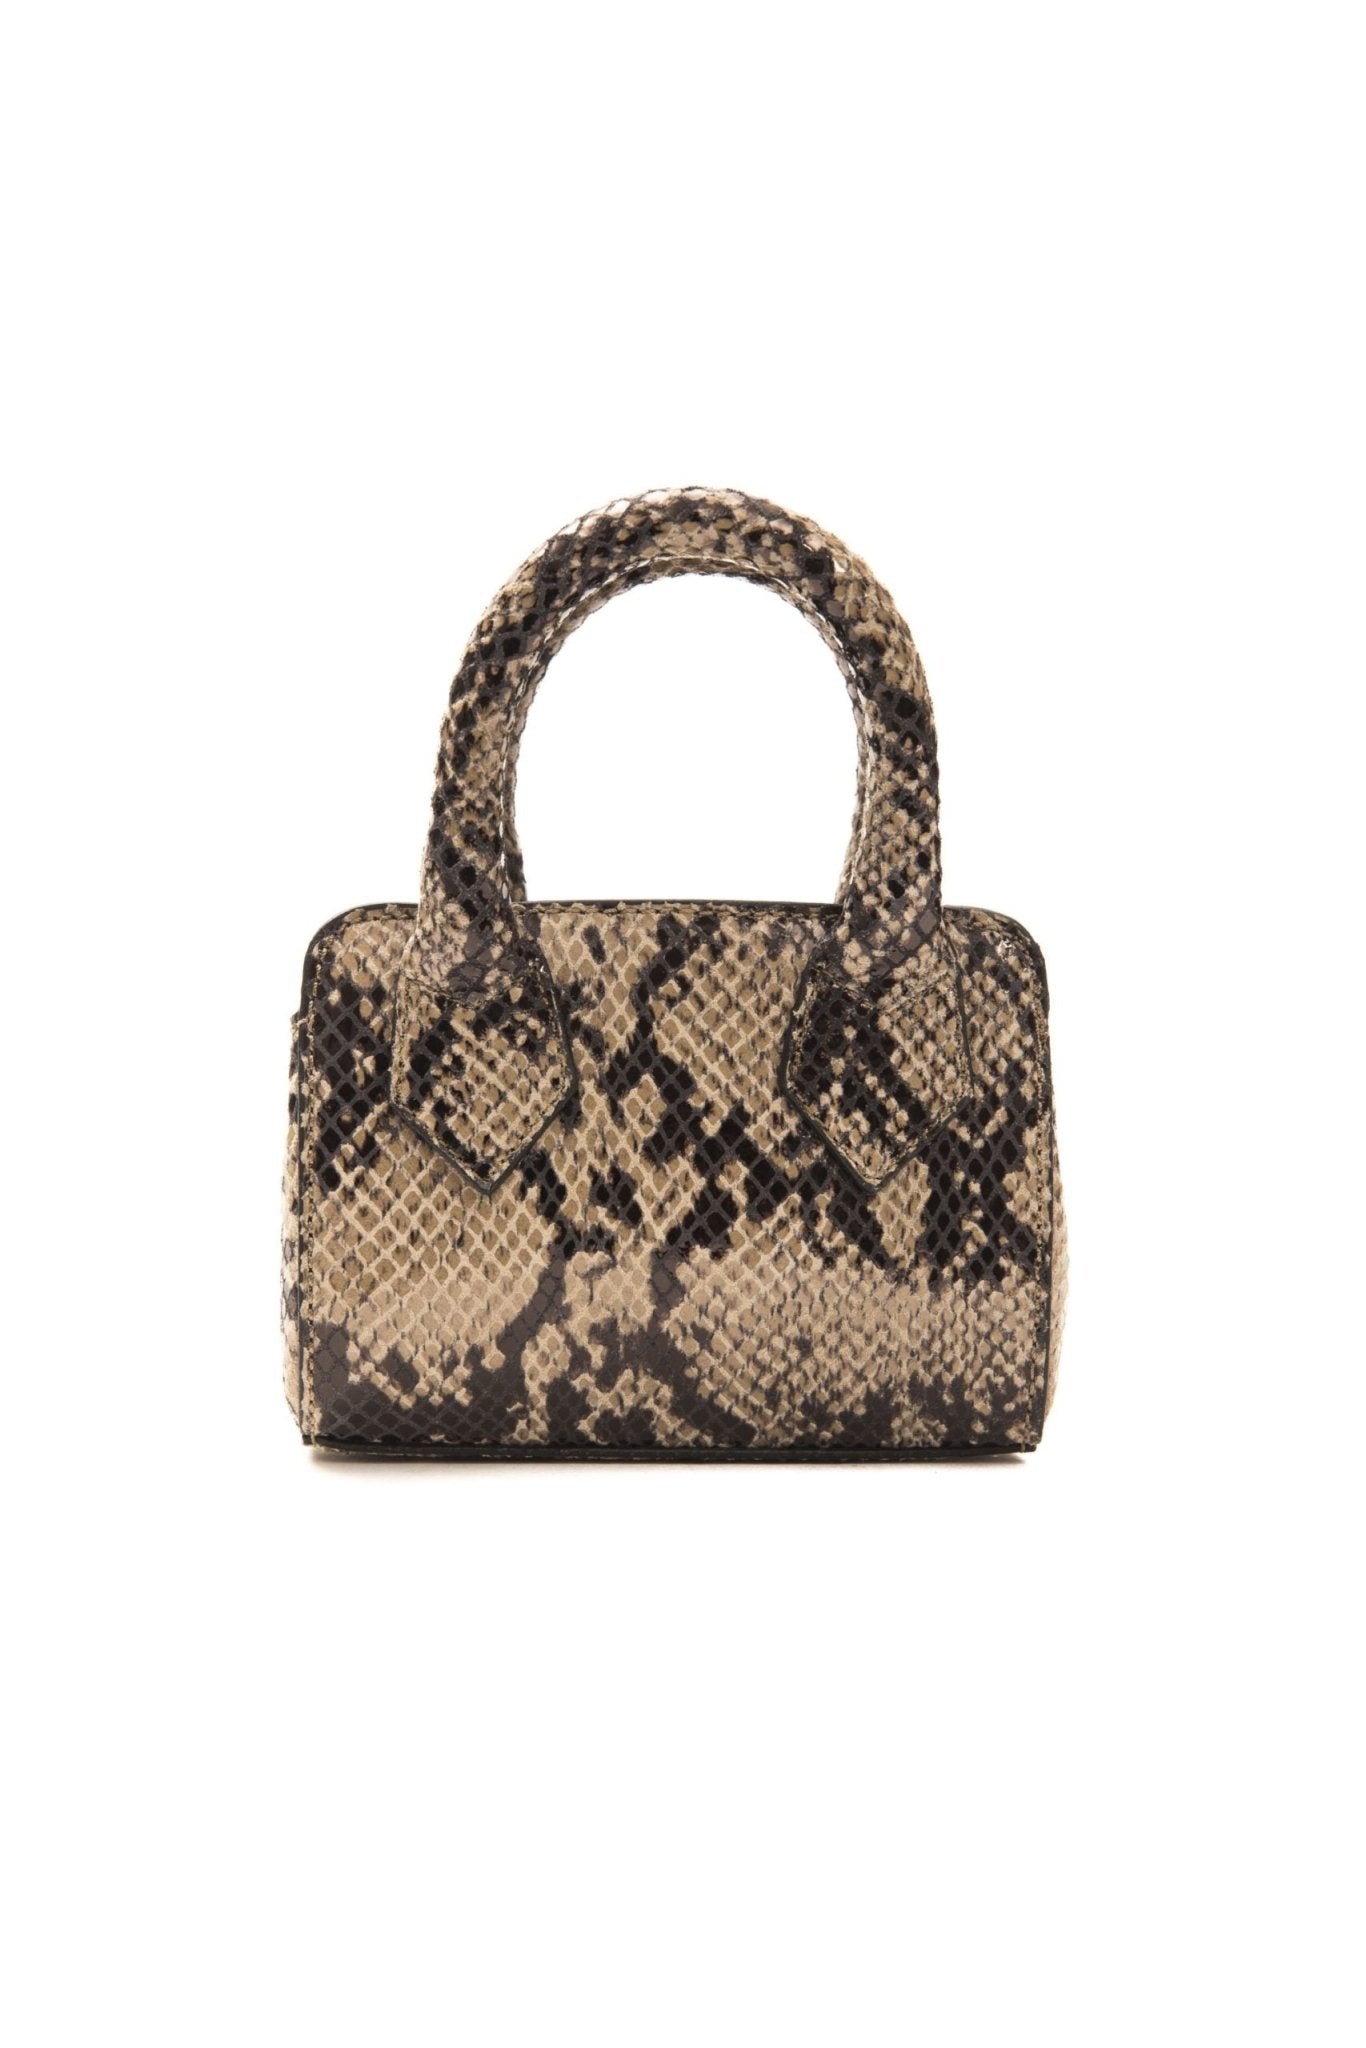 Pompei Donatella Brown Leather Handbag - Fizigo